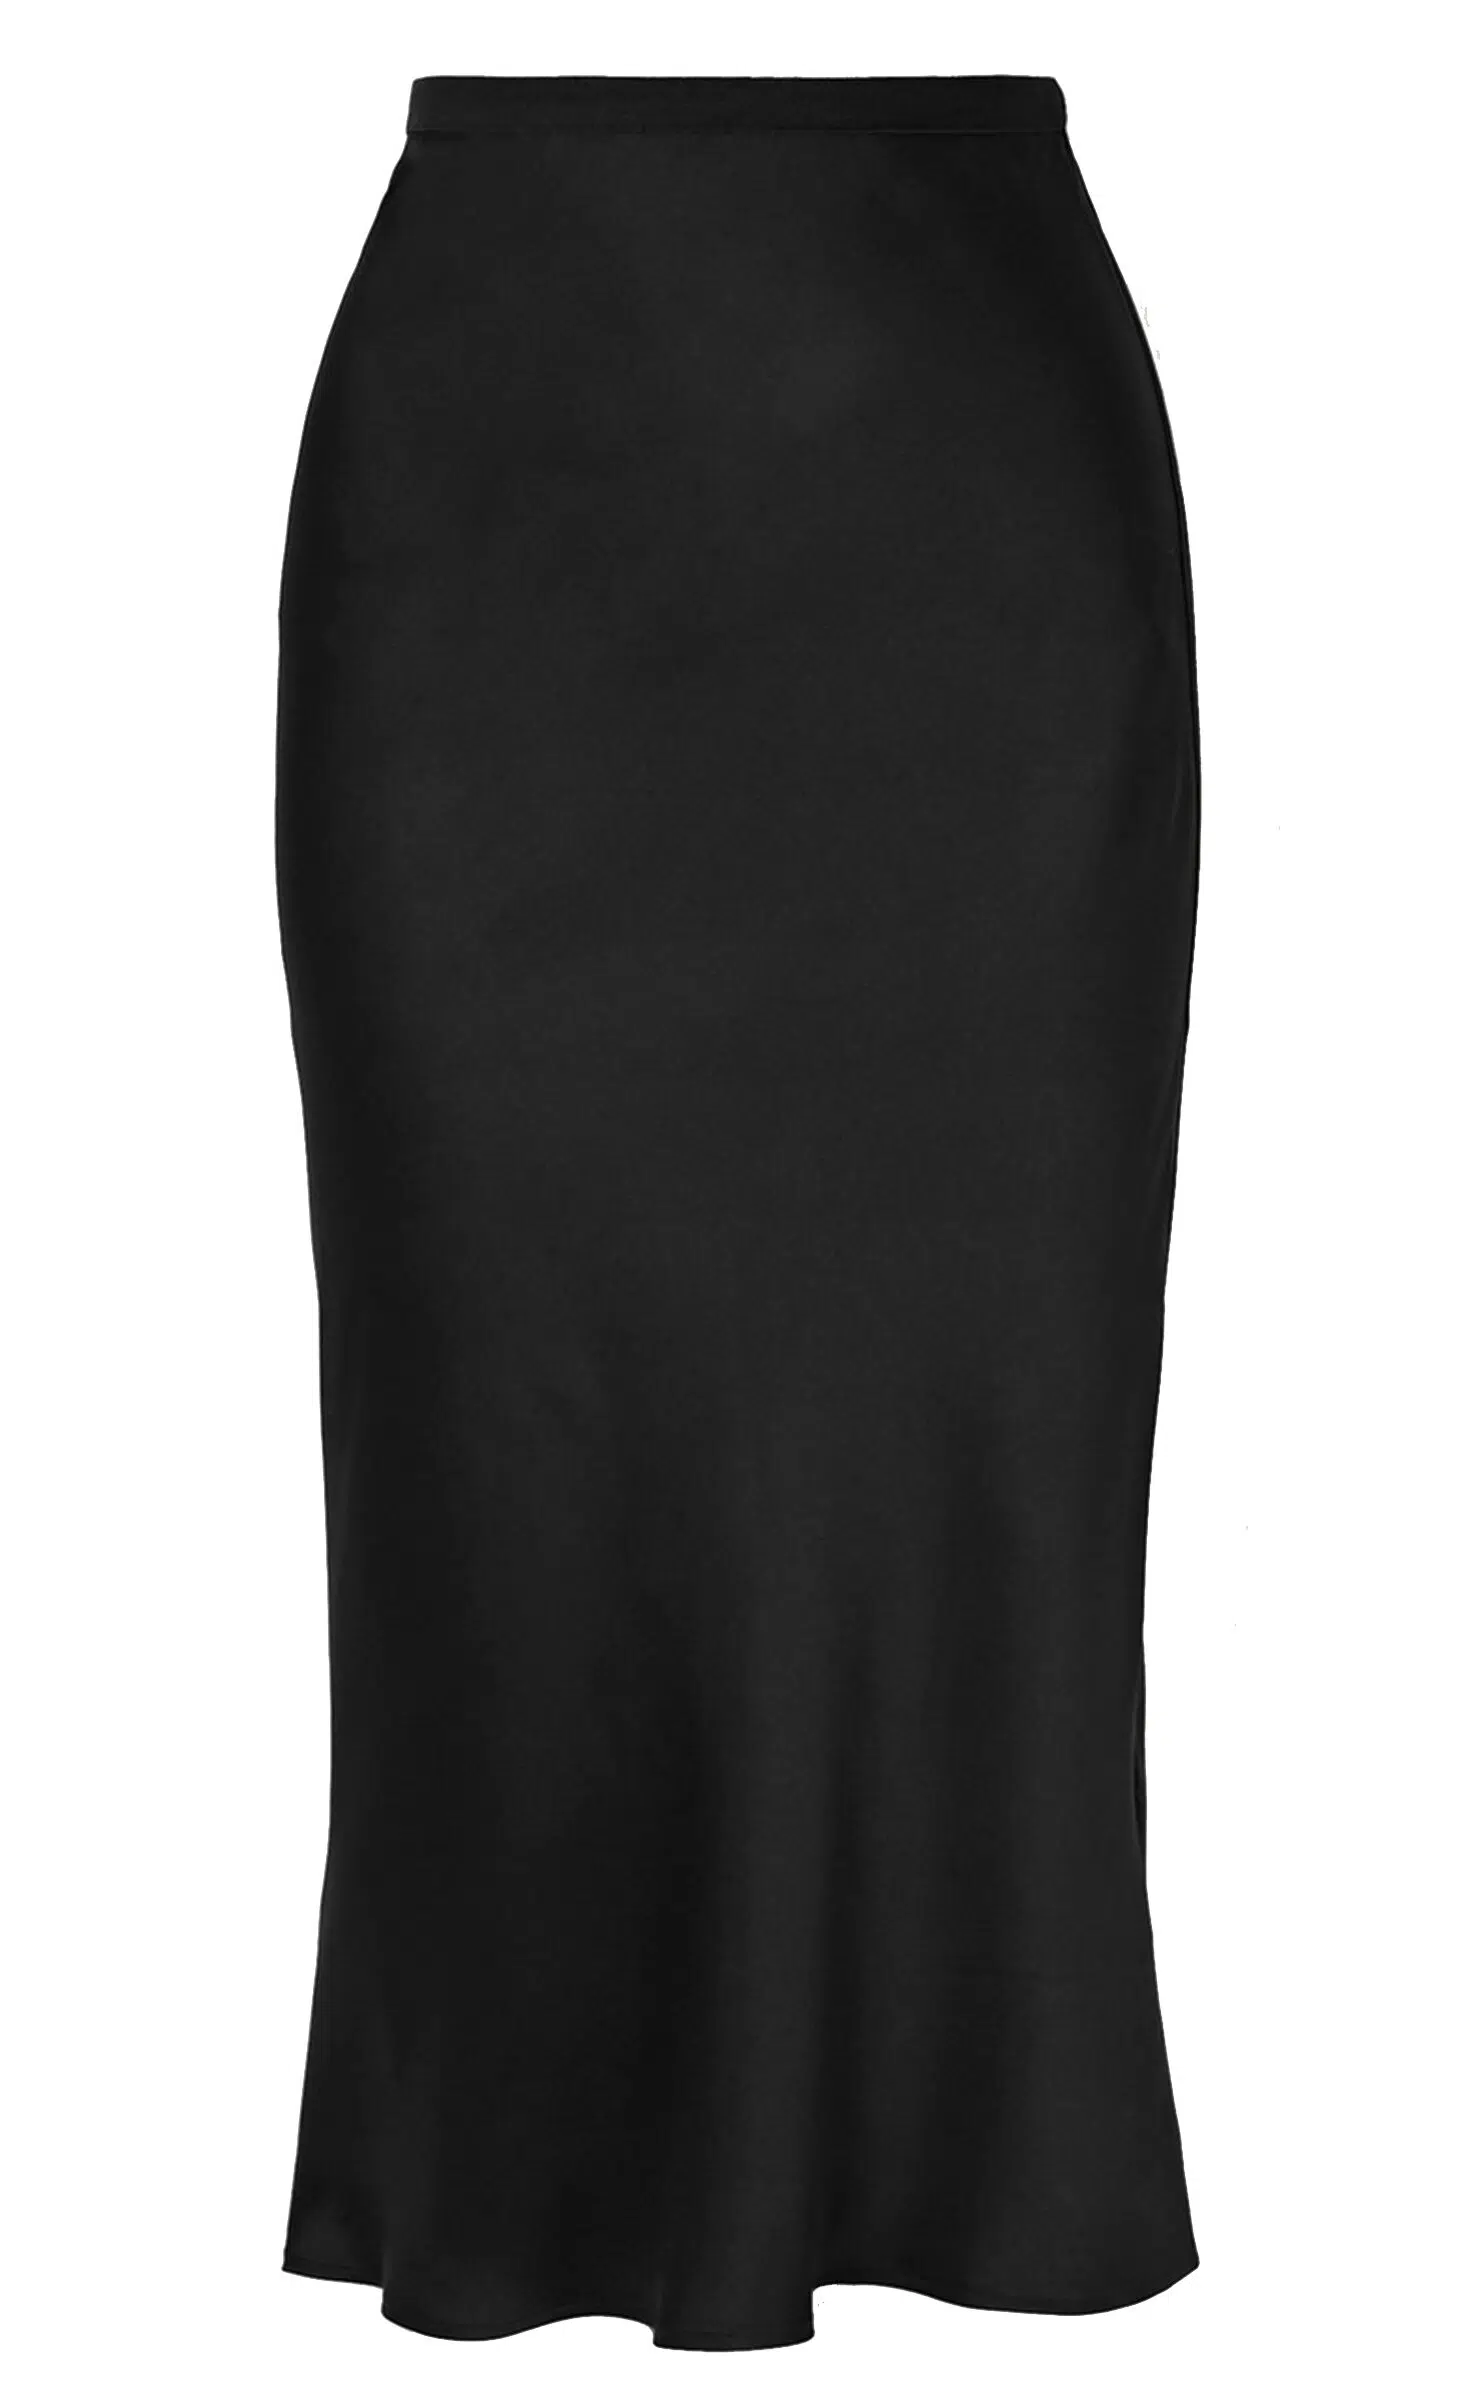 Bar silk skirt | Black - Crush Concept